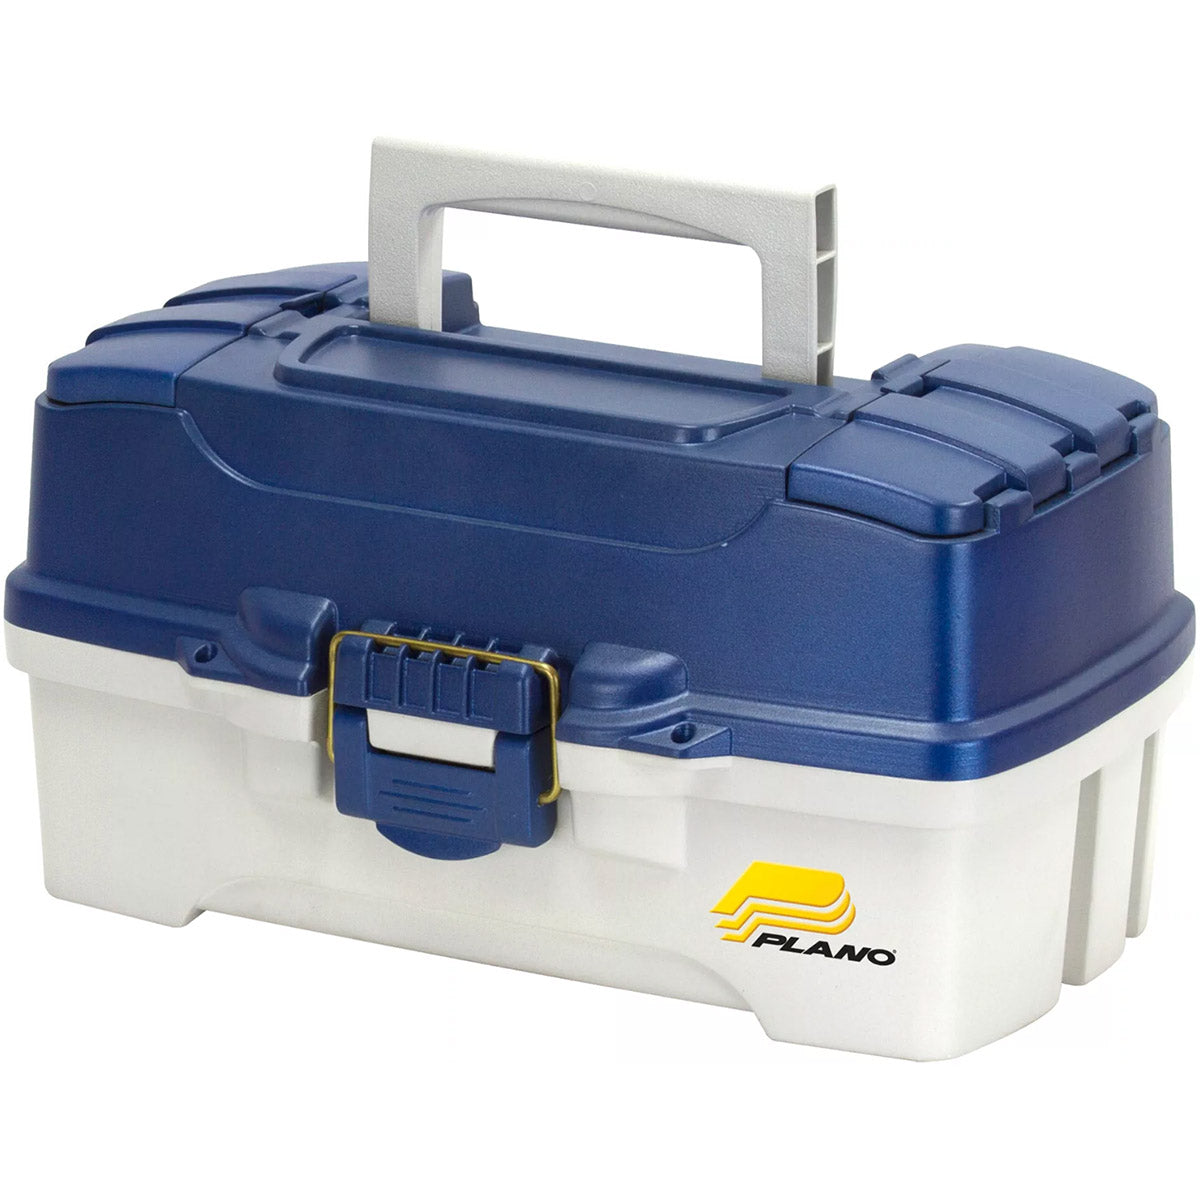 Plano Two Tray Fishing Tackle Box - Model: 6202-06 - Blue/White – Forza  Sports